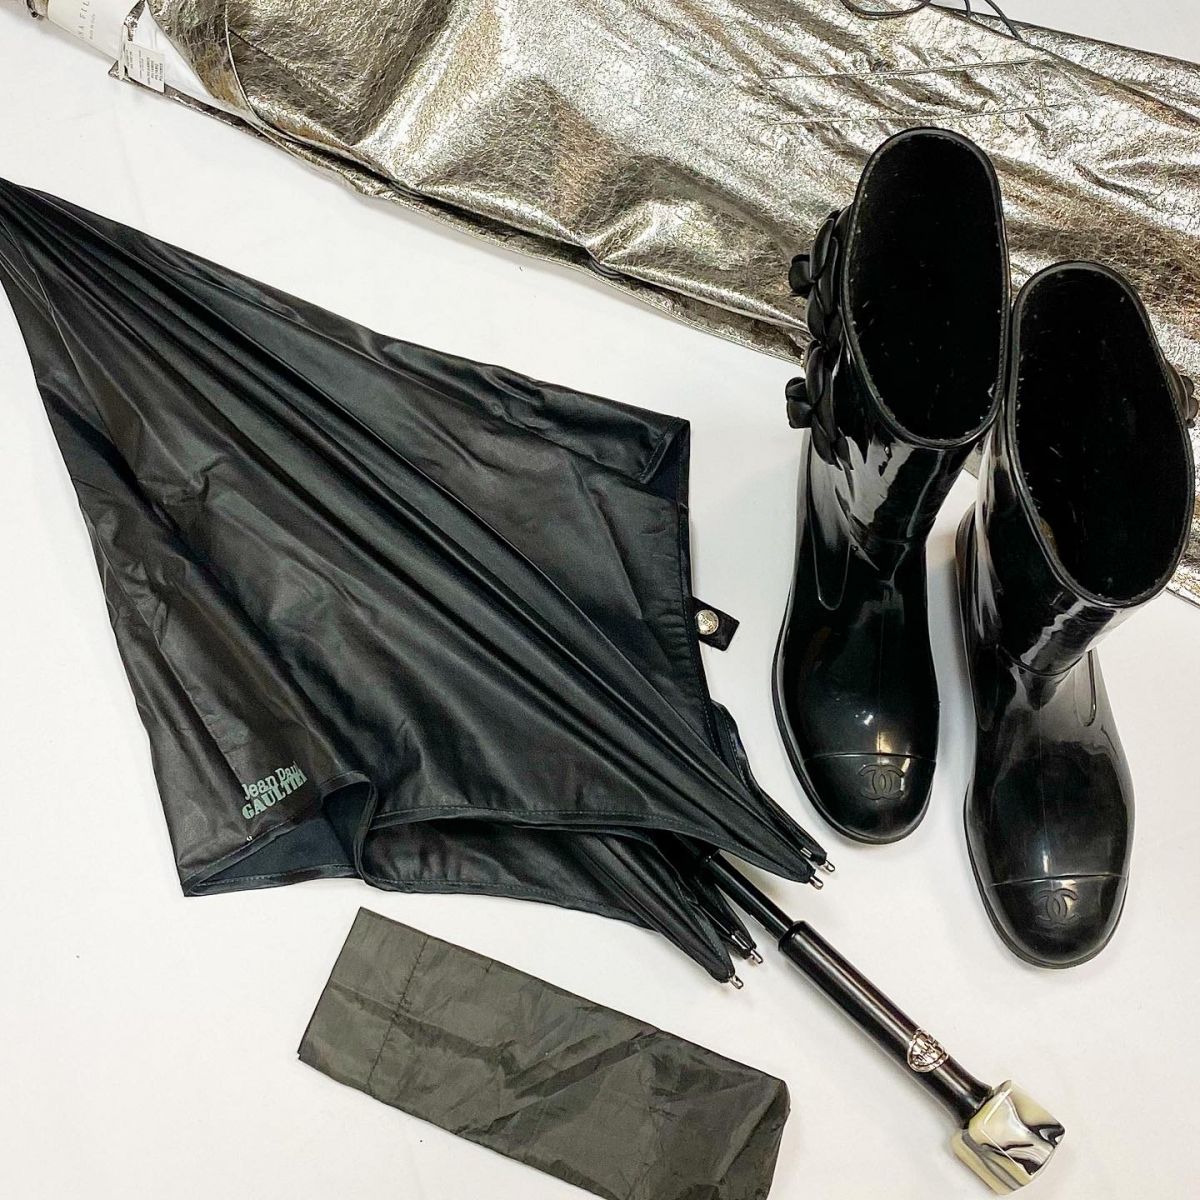 Зонт Jean Paul Gaultier цена 15 385 руб Сапоги / резиновые / Chanel размер 38 цена 10 770 руб